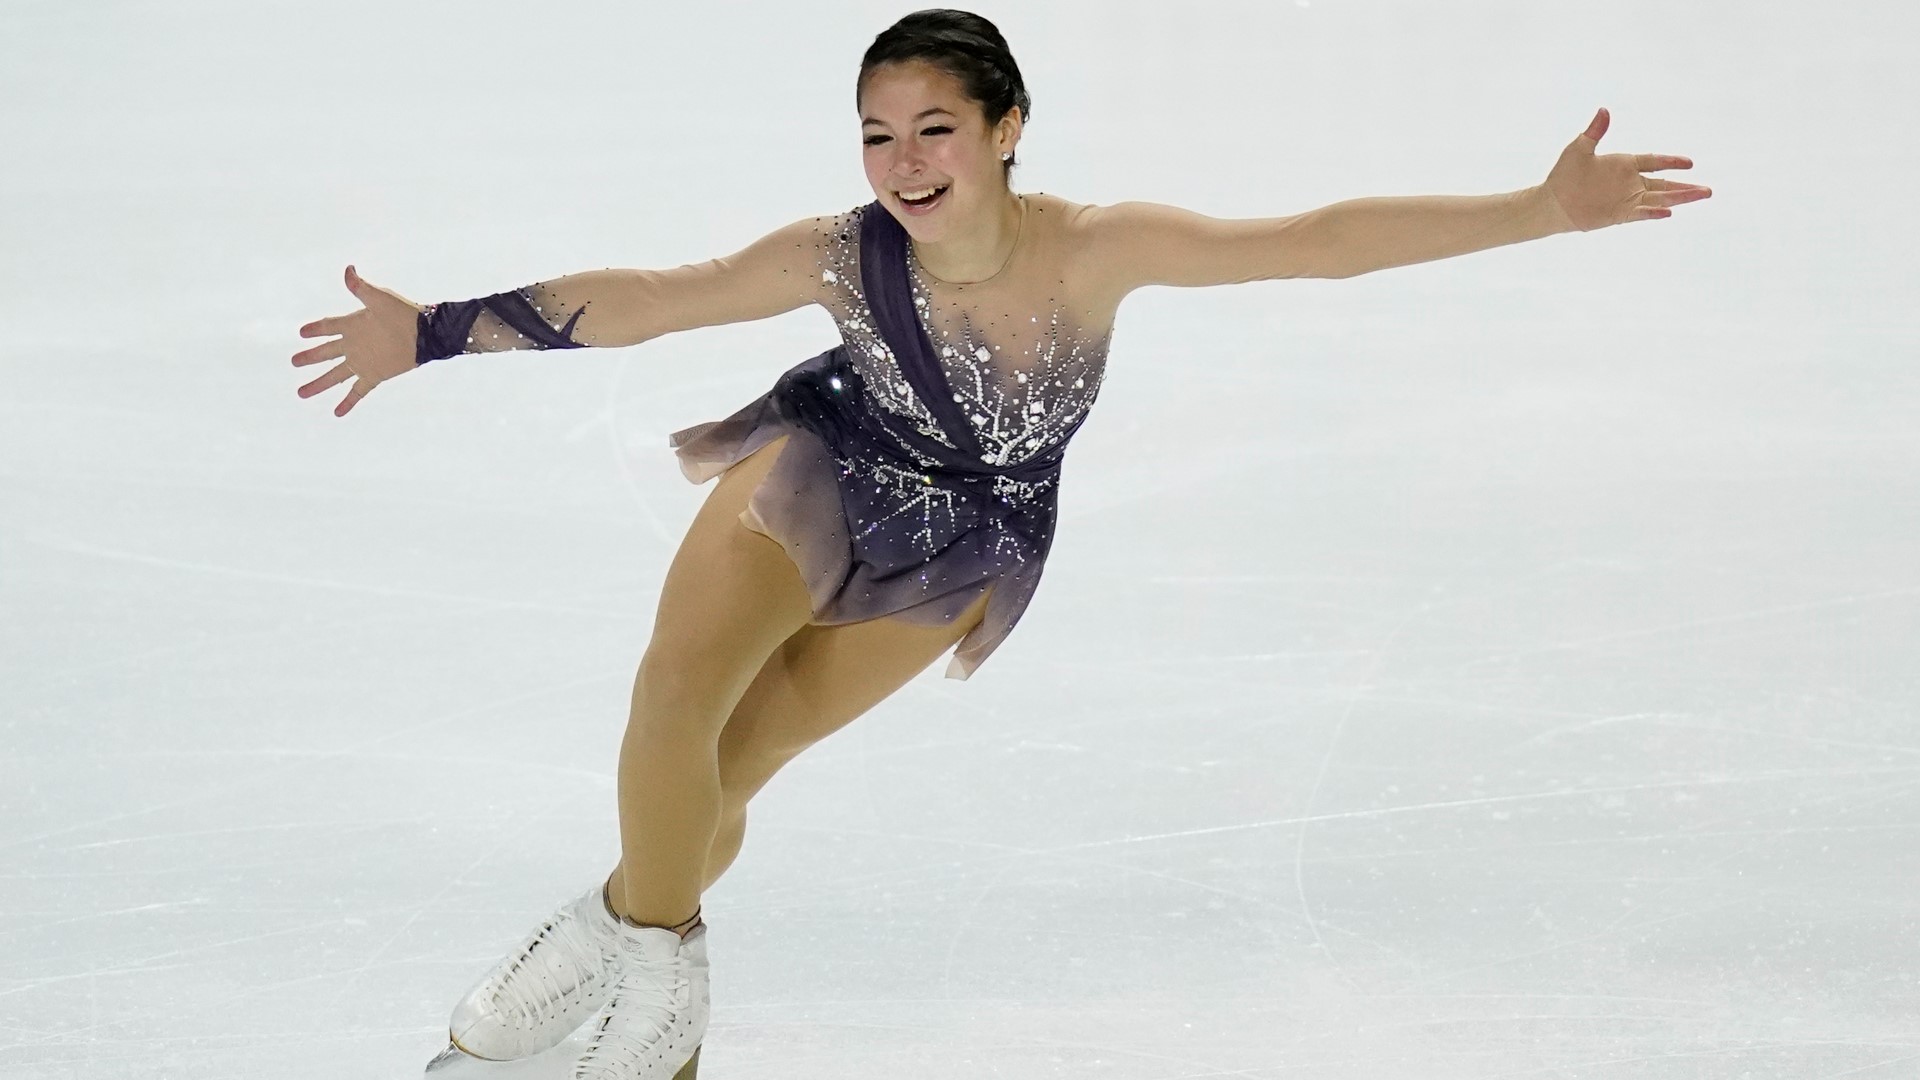 Alysa Liu is the top U.S. figure skater heading into the women's figure skating free skate.